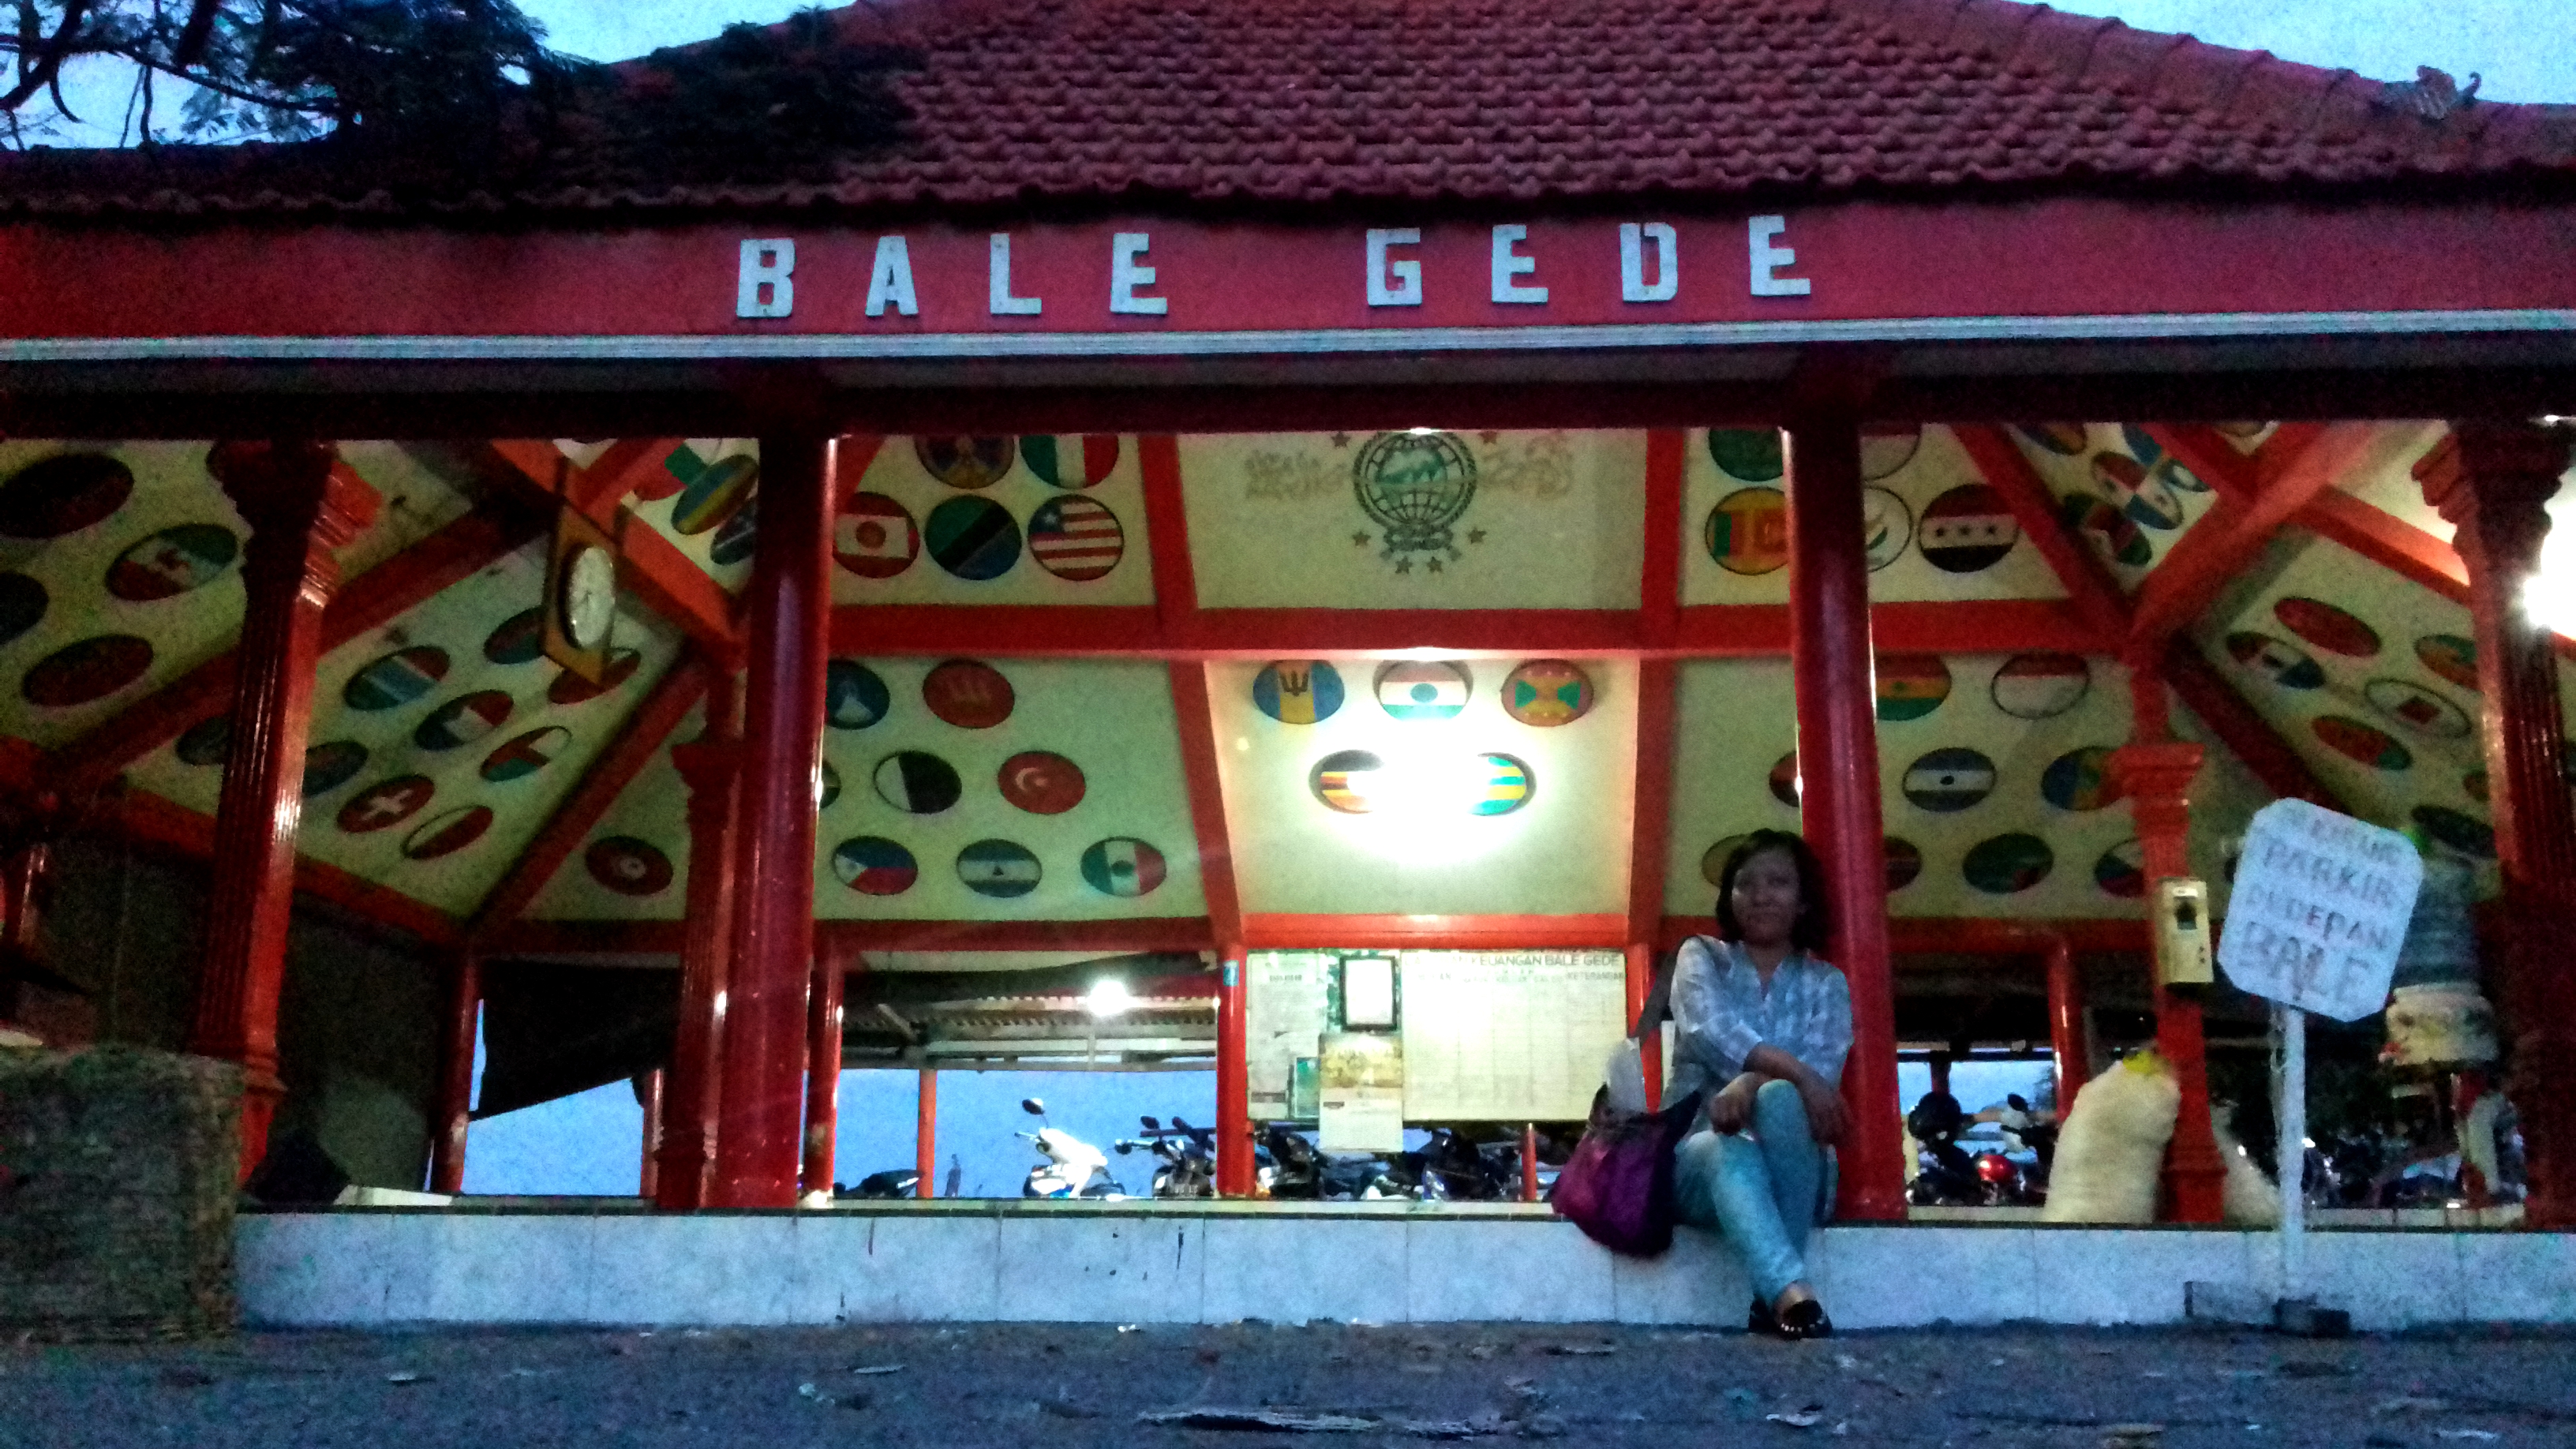 Bale Gede sebelum masuk Geladak Gede (c) Rangga Putra/Travelingyuk